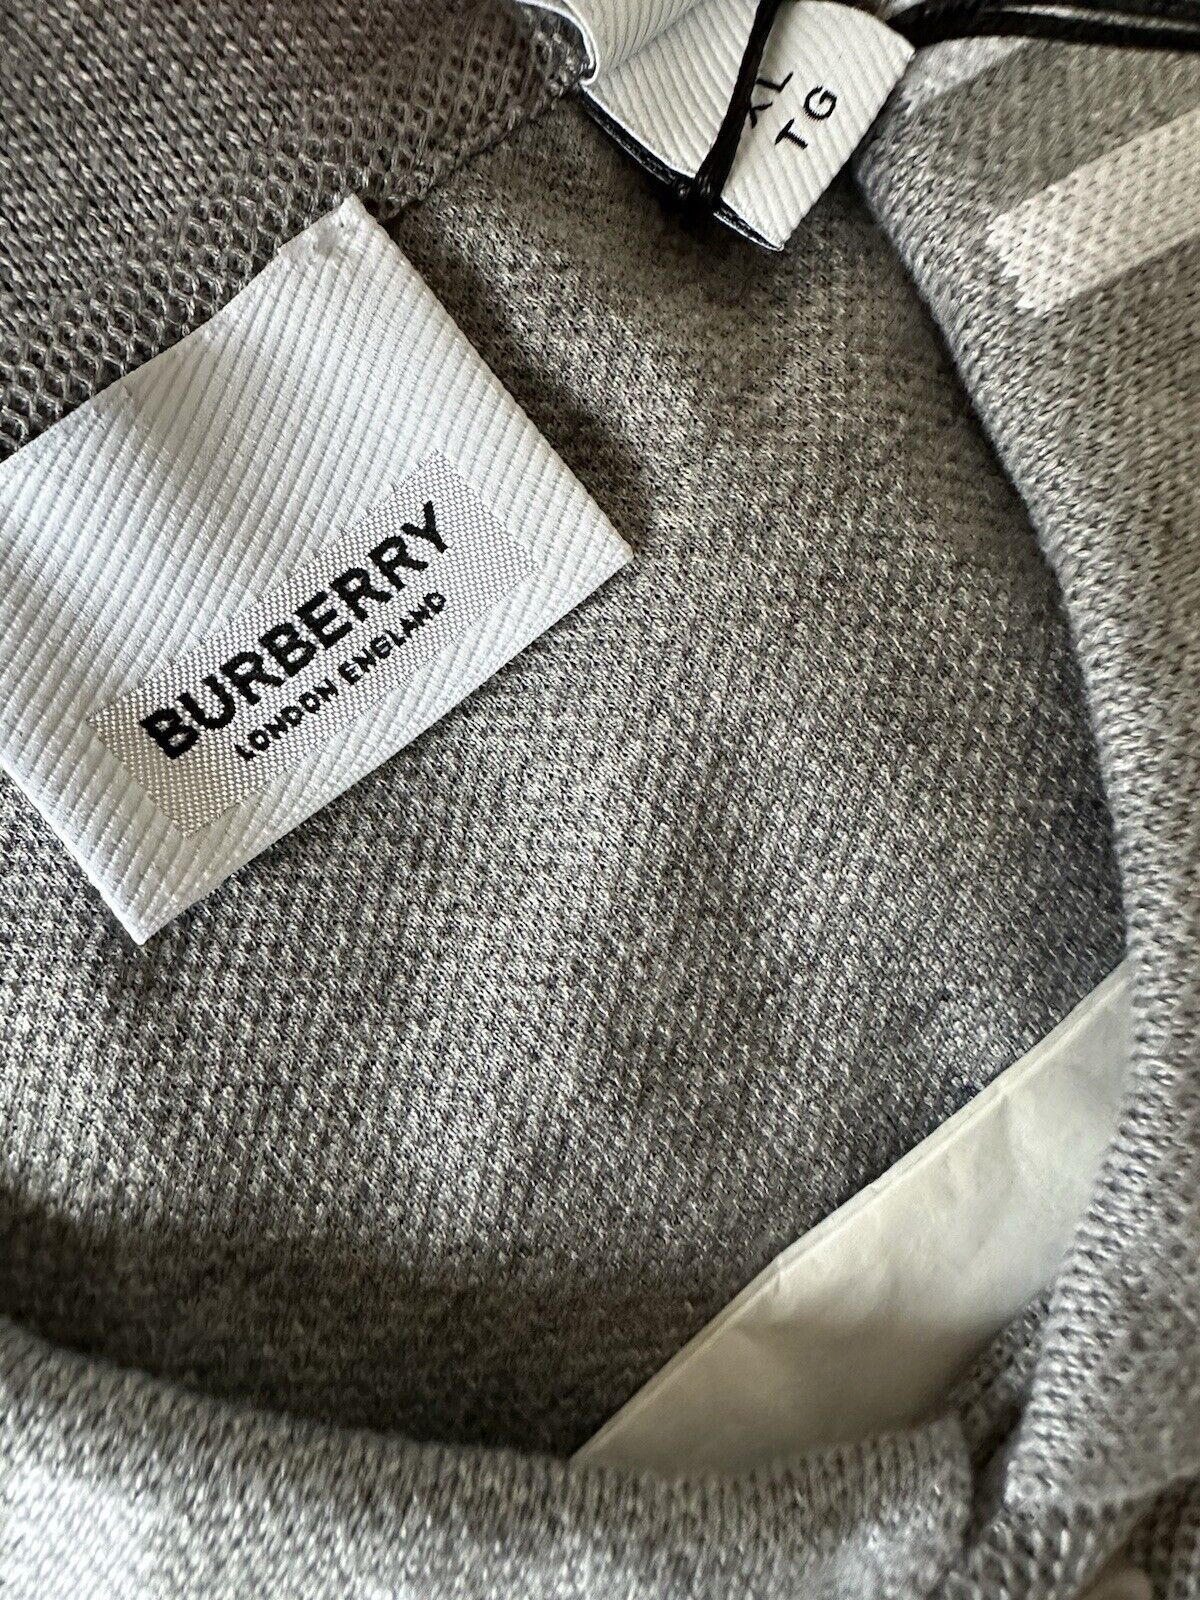 Burberry Ryland Collar Logo Gray Short Sleeve Cotton Polo Shirt XL 8067537